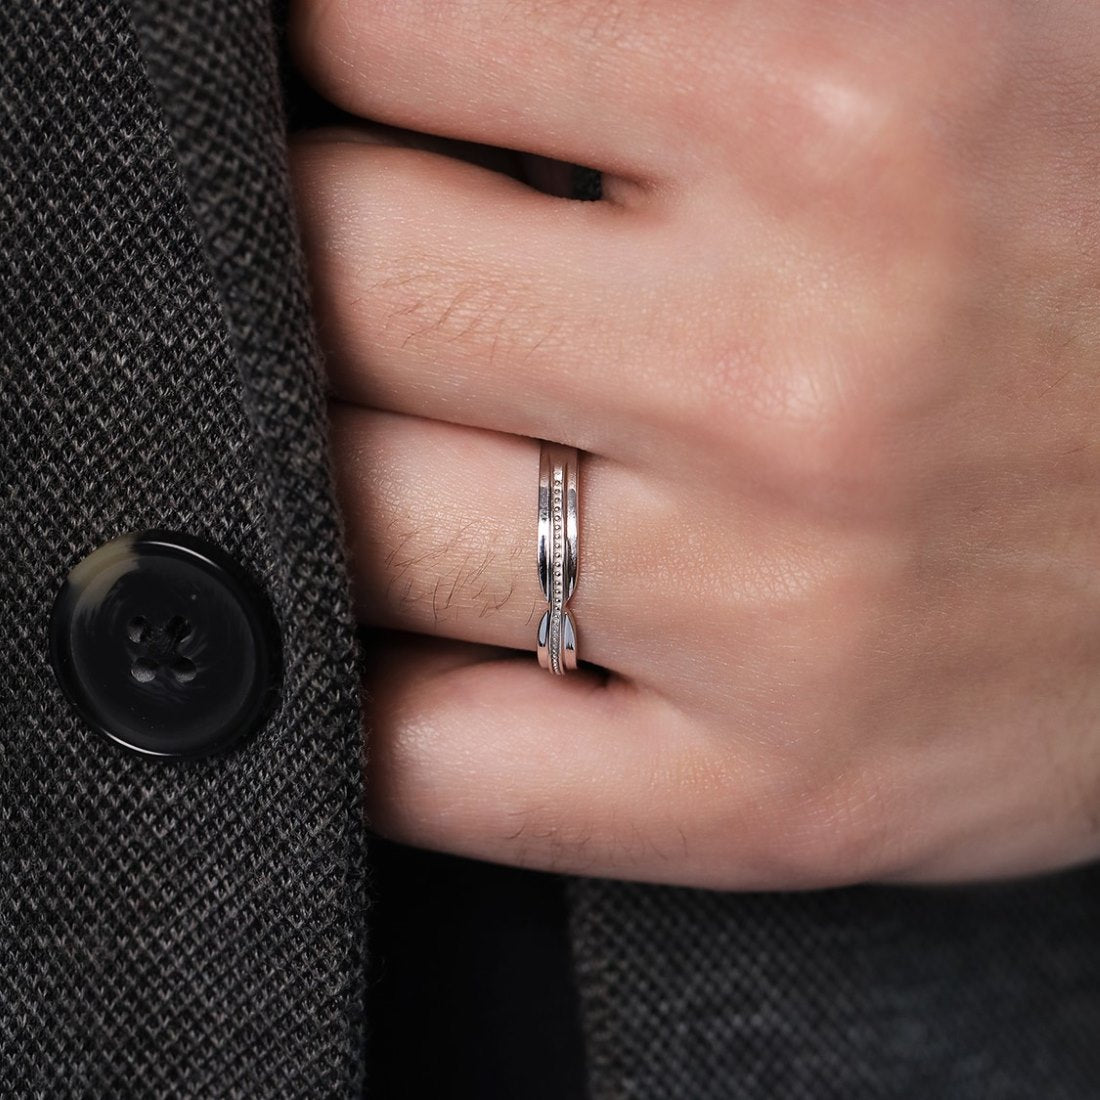 Elegant and Sleek 925 Sterling Silver Silver Ring For Him (Adjustable)